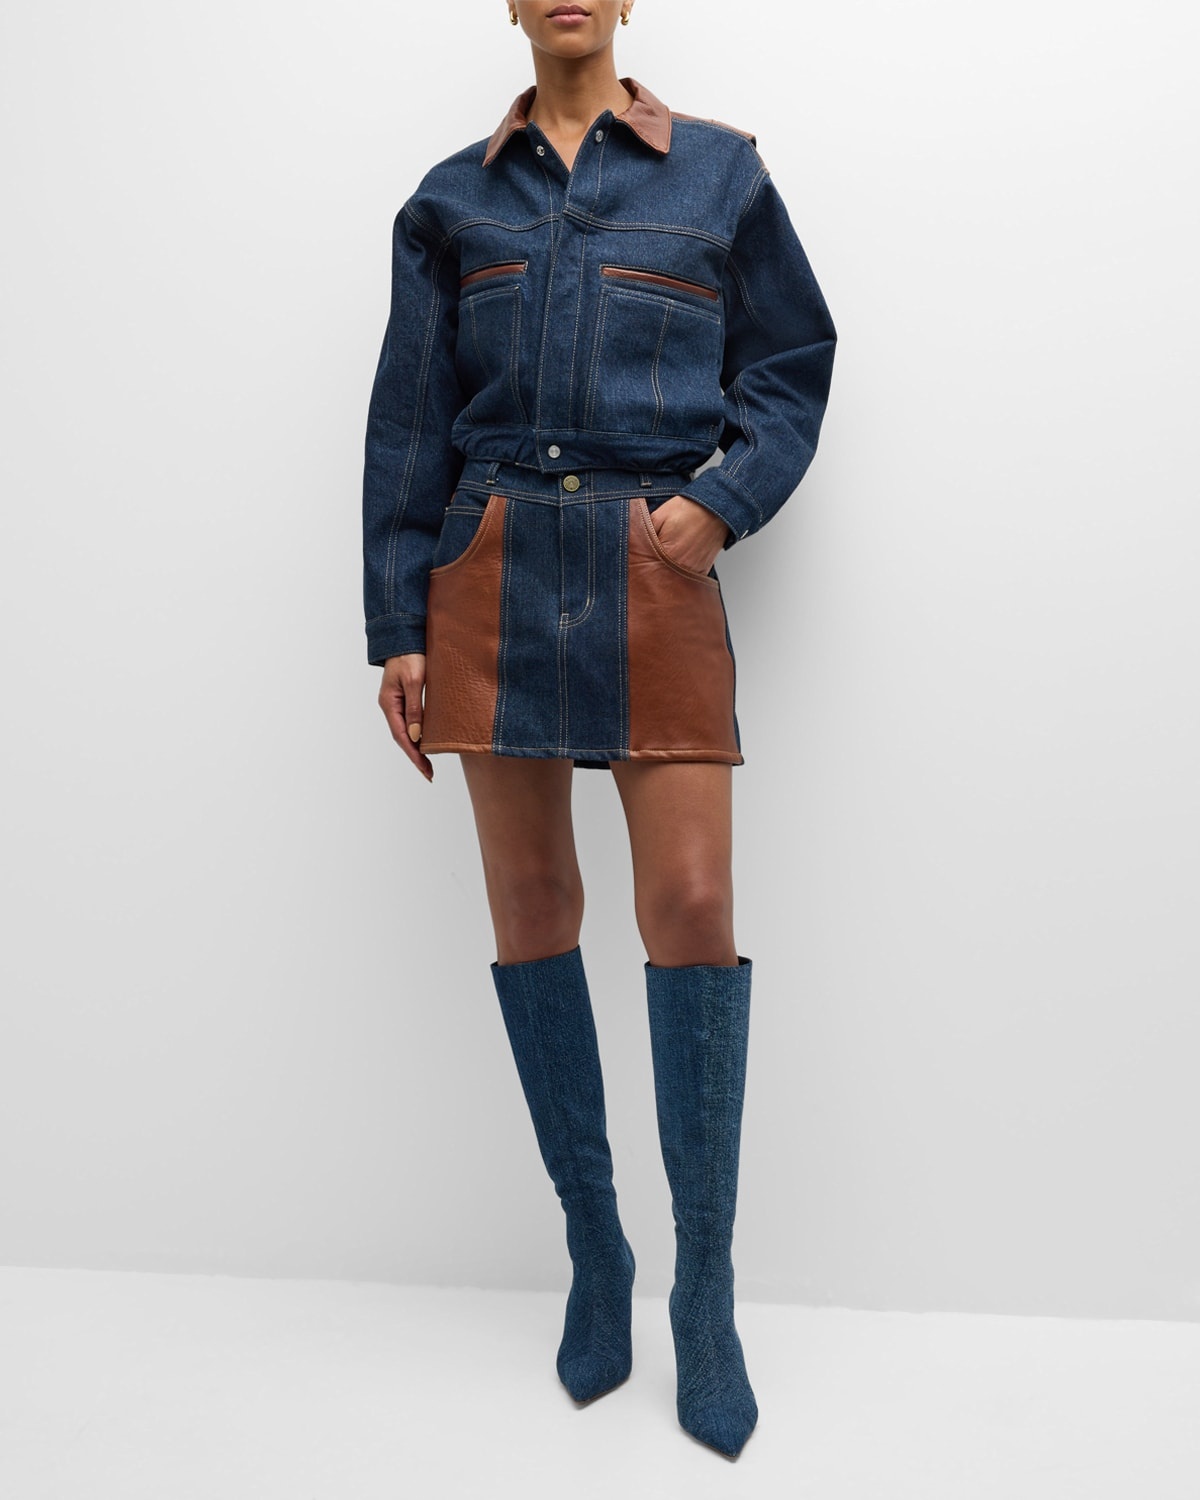 Atelier Denim and Leather Mini Skirt - 3